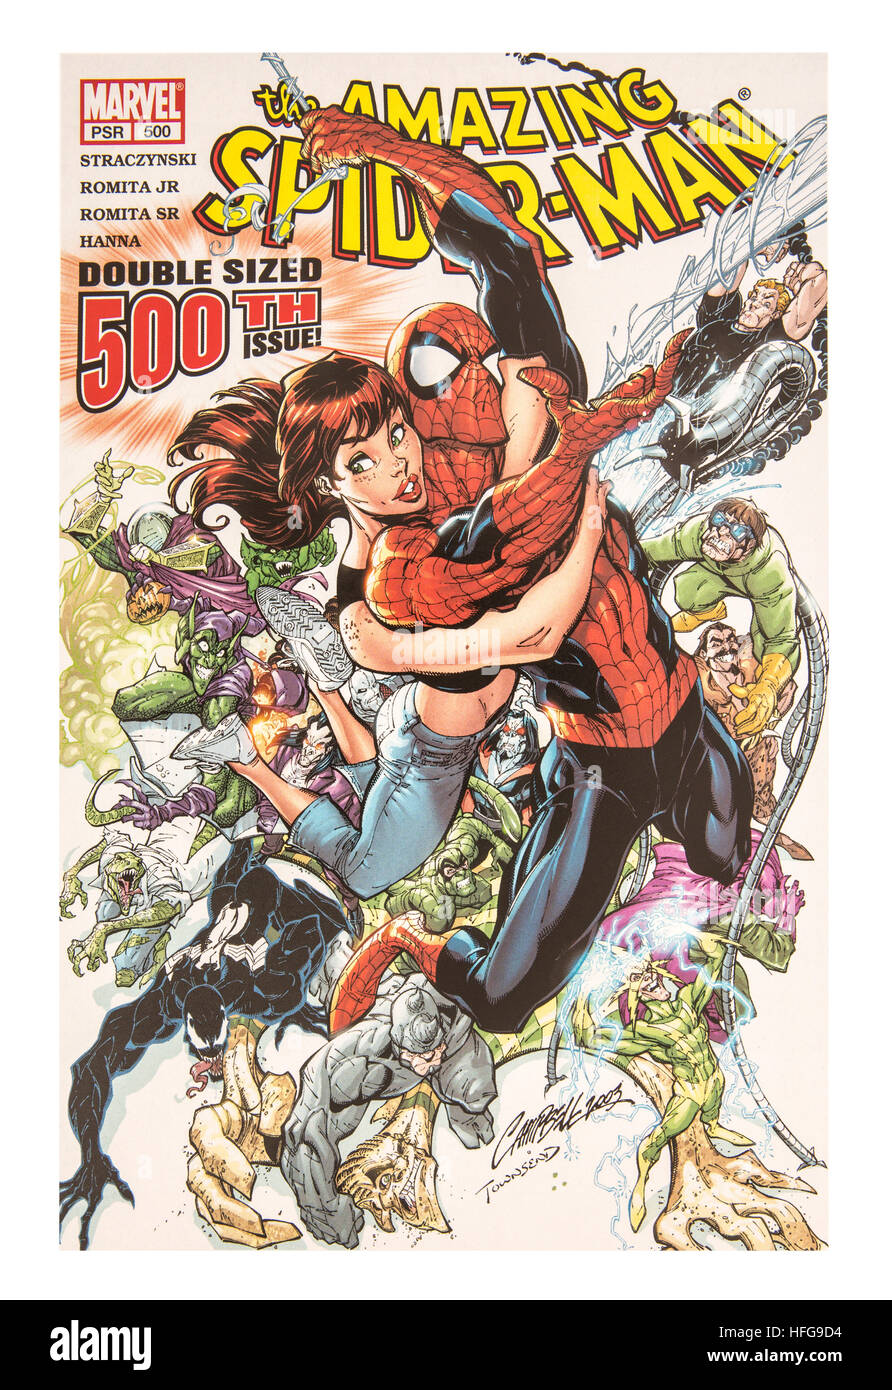 MARVEL Comics The Amazing Spider-Man su sfondo bianco Foto Stock